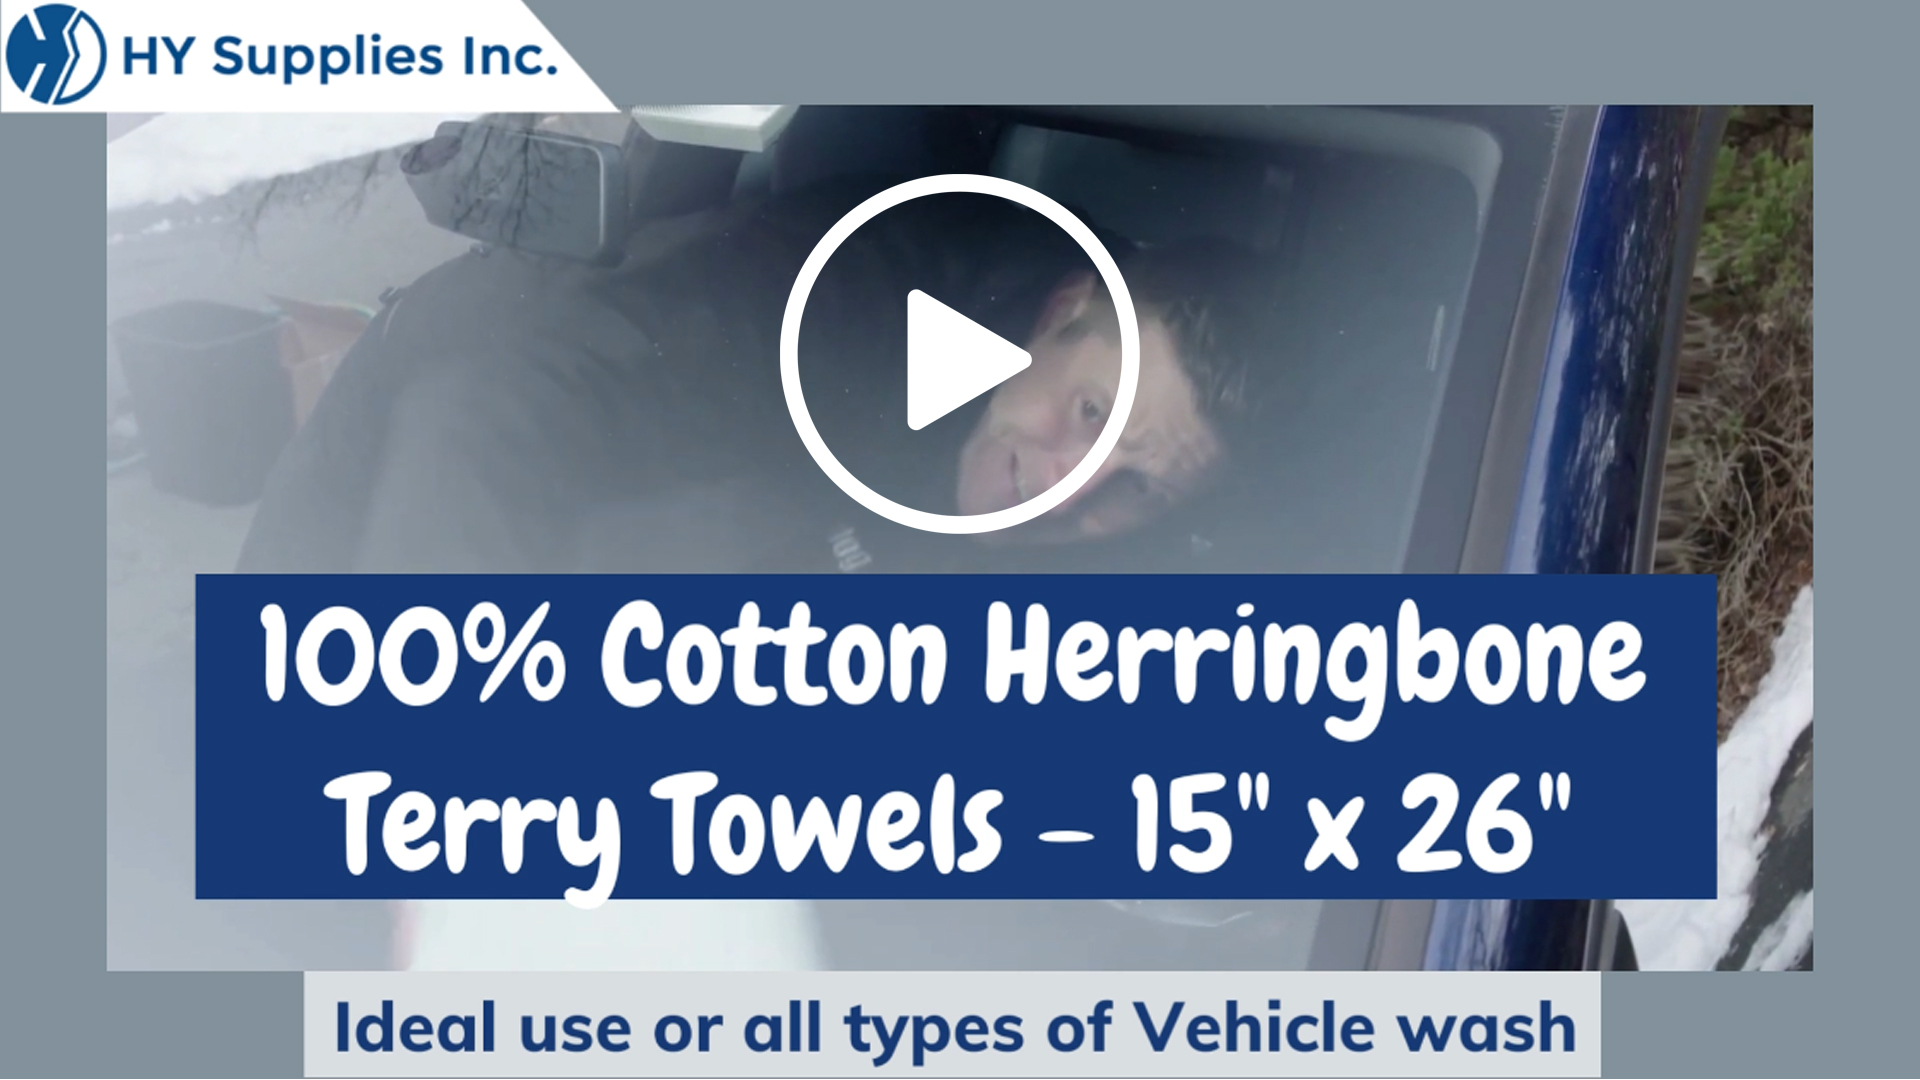 100% Cotton Herringbone Terry Towels - 15" x 26"